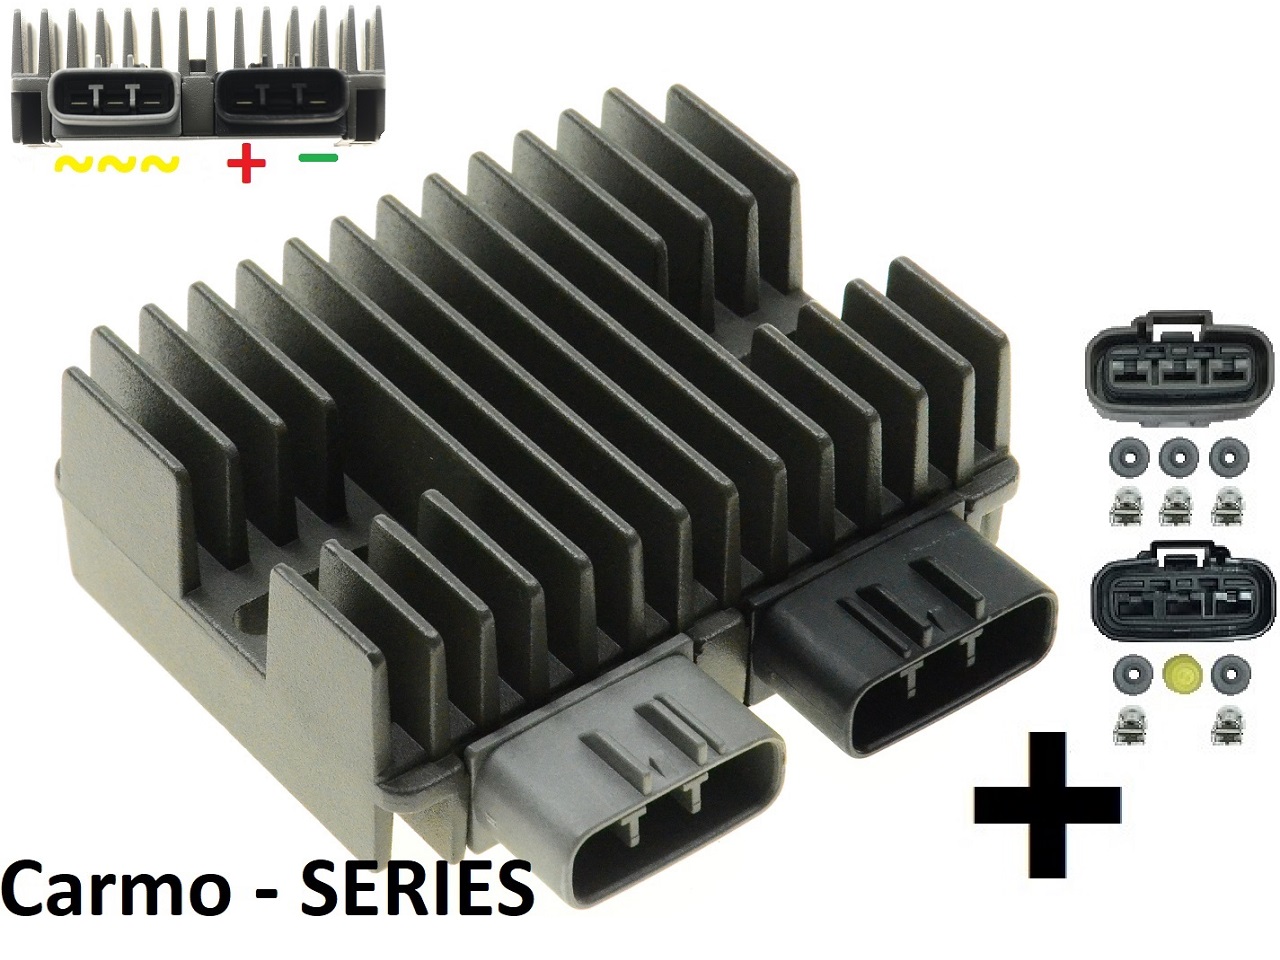 CARR5925-SERIE - MOSFET SERIE SERIES Voltage regulator rectifier (improved SH847) like compu-fire + conectores - Clique na Imagem para Fechar